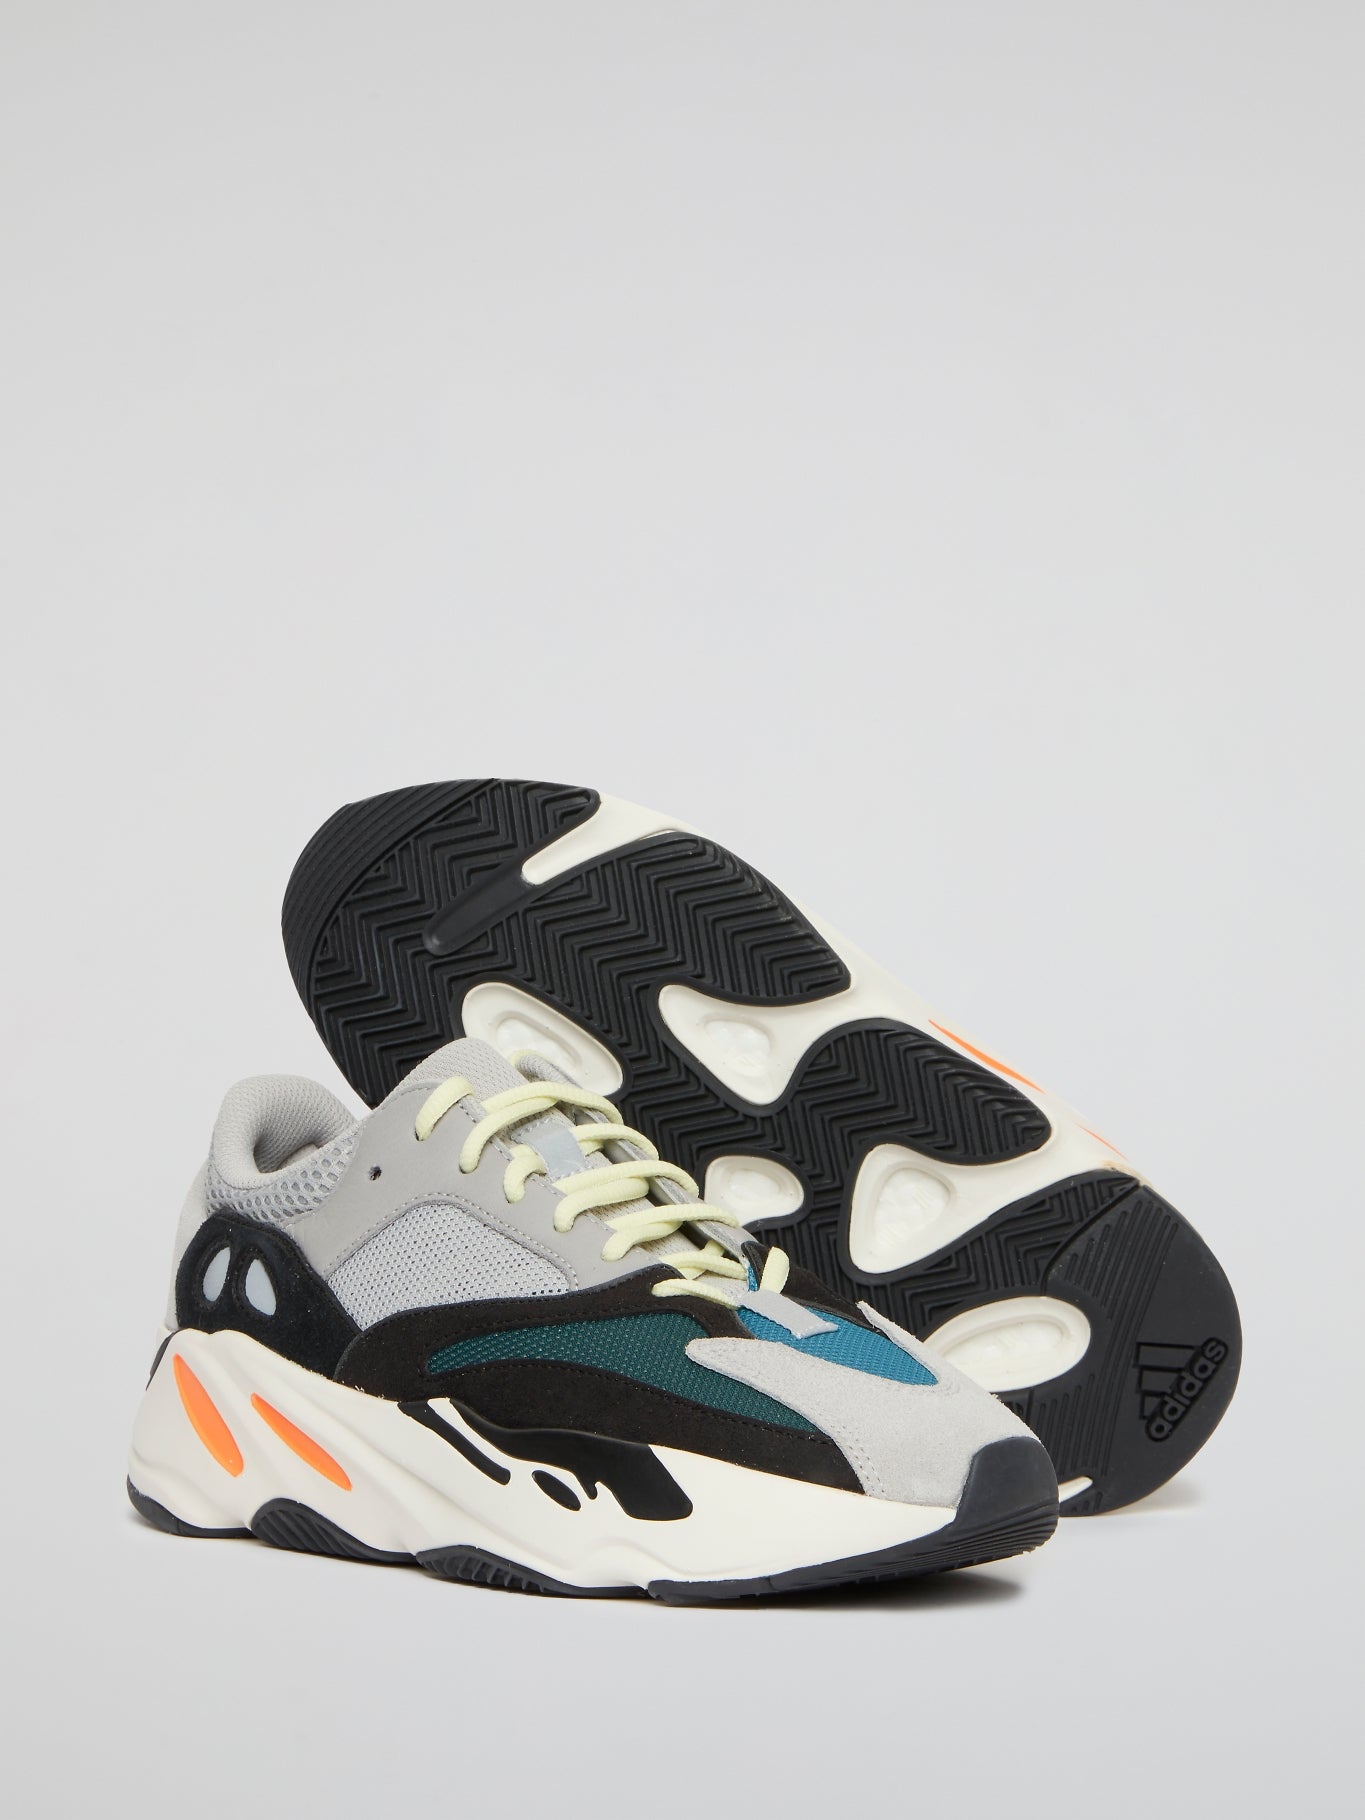 Yeezy Boost 700 Wave Runner Sneakers - (Size 8.5)